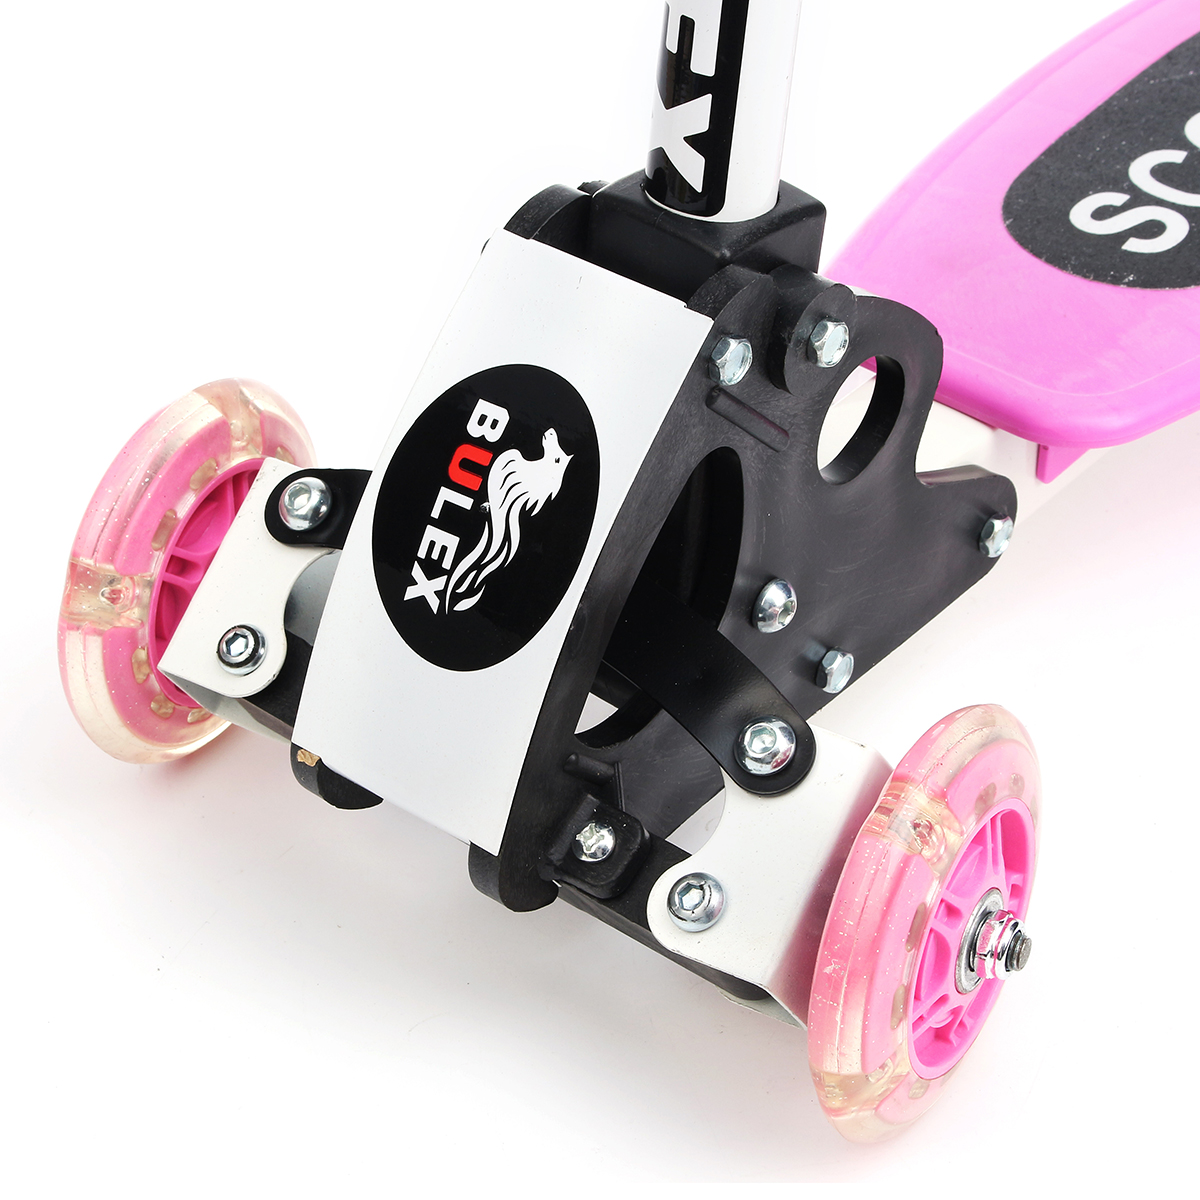 3-Wheels-15kmh-Foldable-Aluminum-Alloy-PU-Wheel-Anti-Skidding-Kick-Scooter-For-Kids-1258935